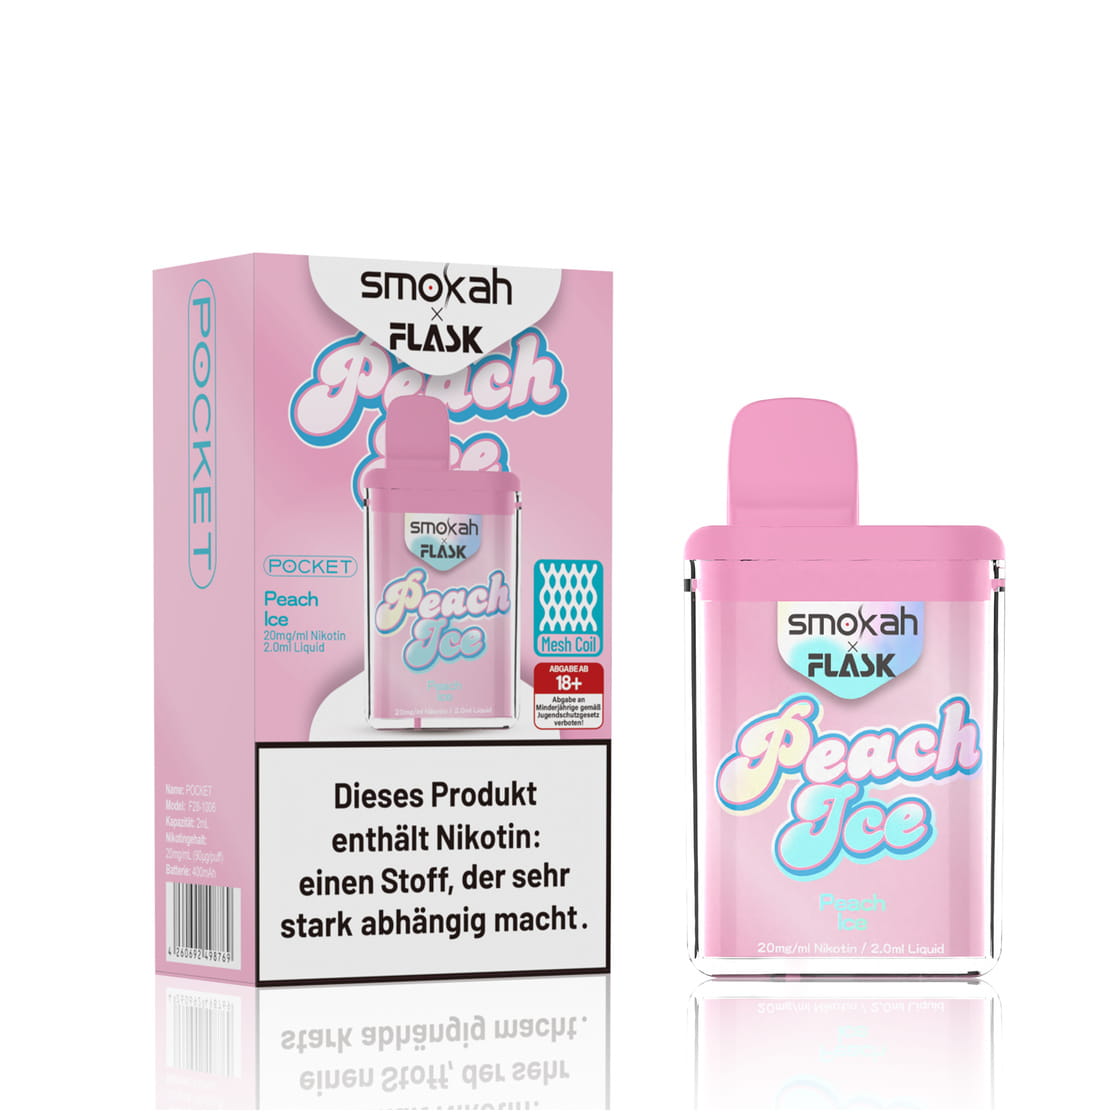 Smokah x Flask Pocket - Einweg E-Shisha - Peach Ice 2% Nikotin